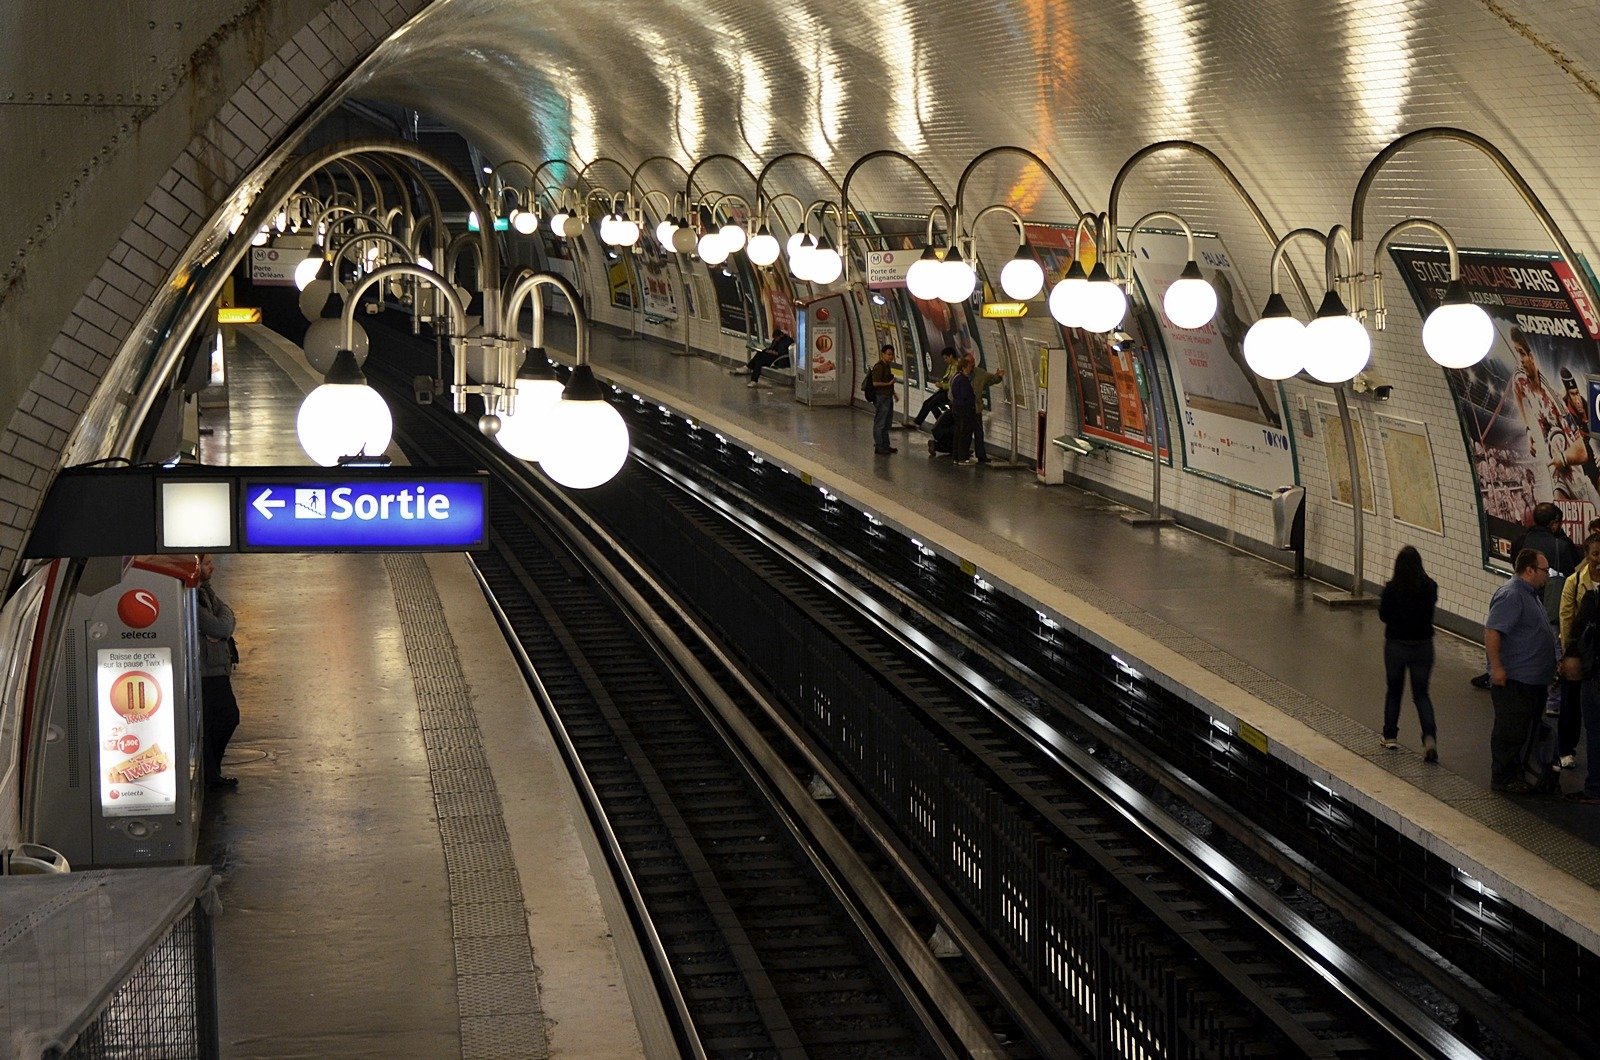 Кубинская метро. Станция Arts et métiers, Париж, Франция. Метро Парижа. Метро Франции Париж. Станции метро Парижа.